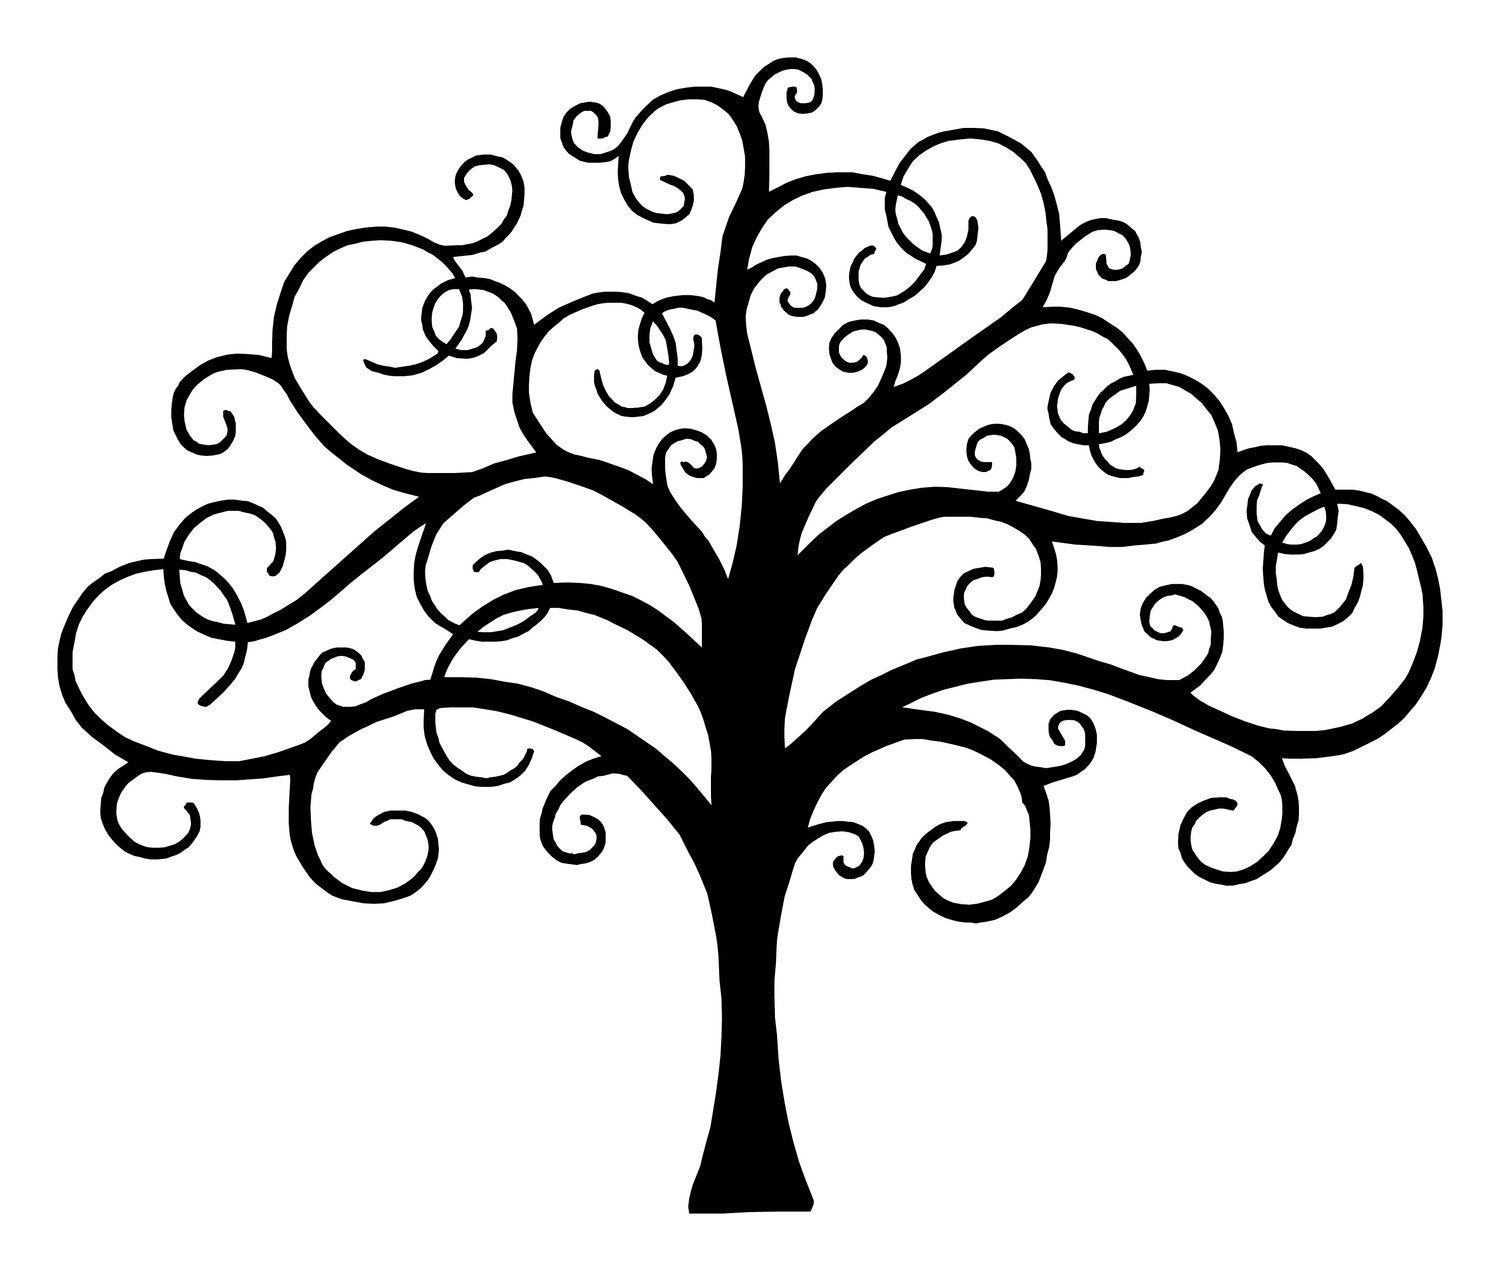 tree of life on Pinterest Family Trees, Tree Of Life and Celtic Tree